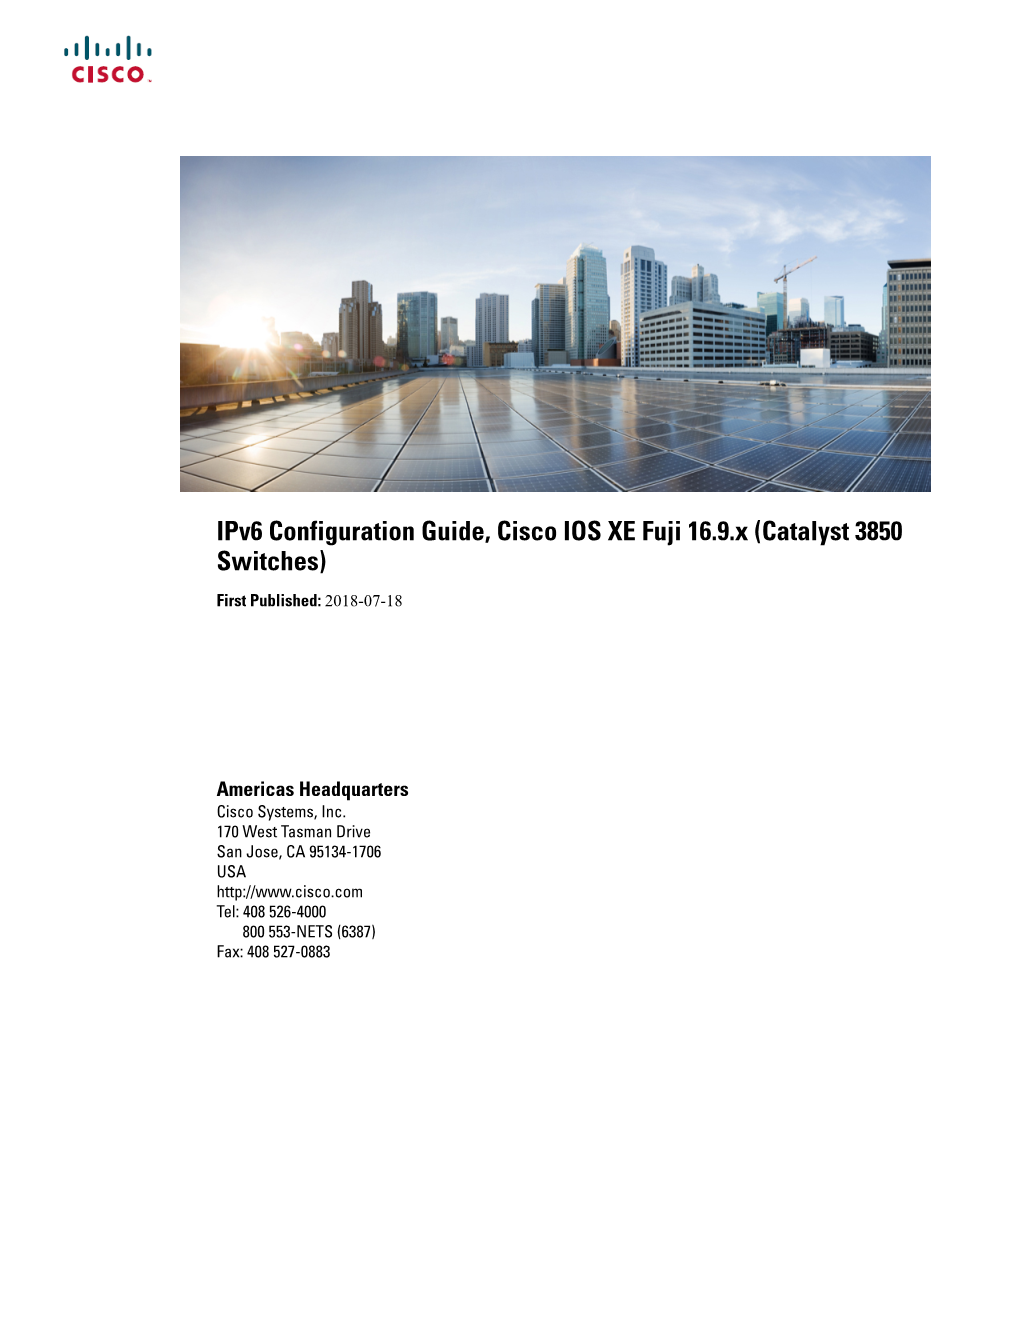 Ipv6 Configuration Guide, Cisco IOS XE Fuji 16.9.X (Catalyst 3850 Switches)